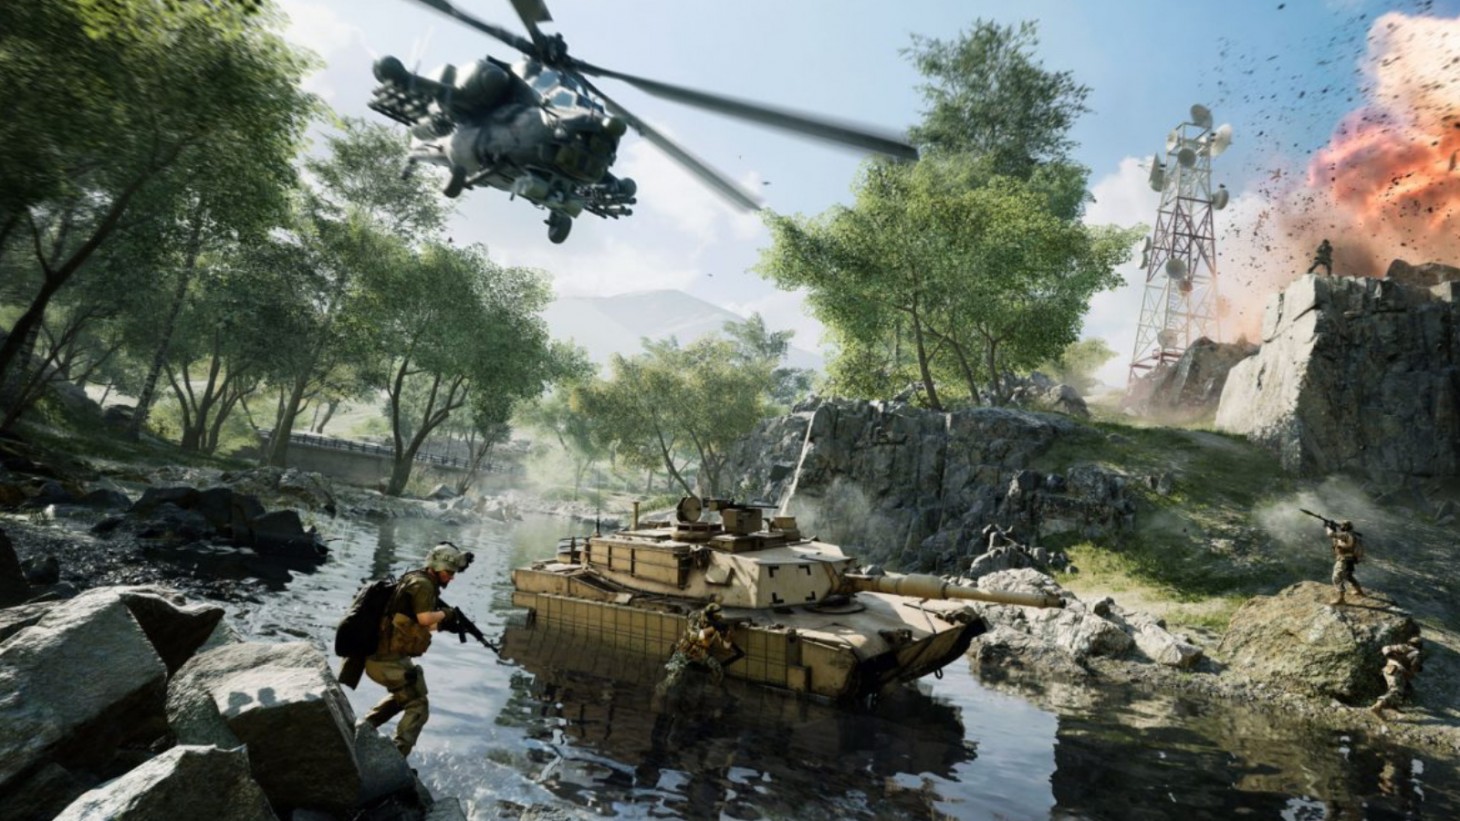 No More Battlefield 4 Content Updates, DICE Suggests - GameSpot